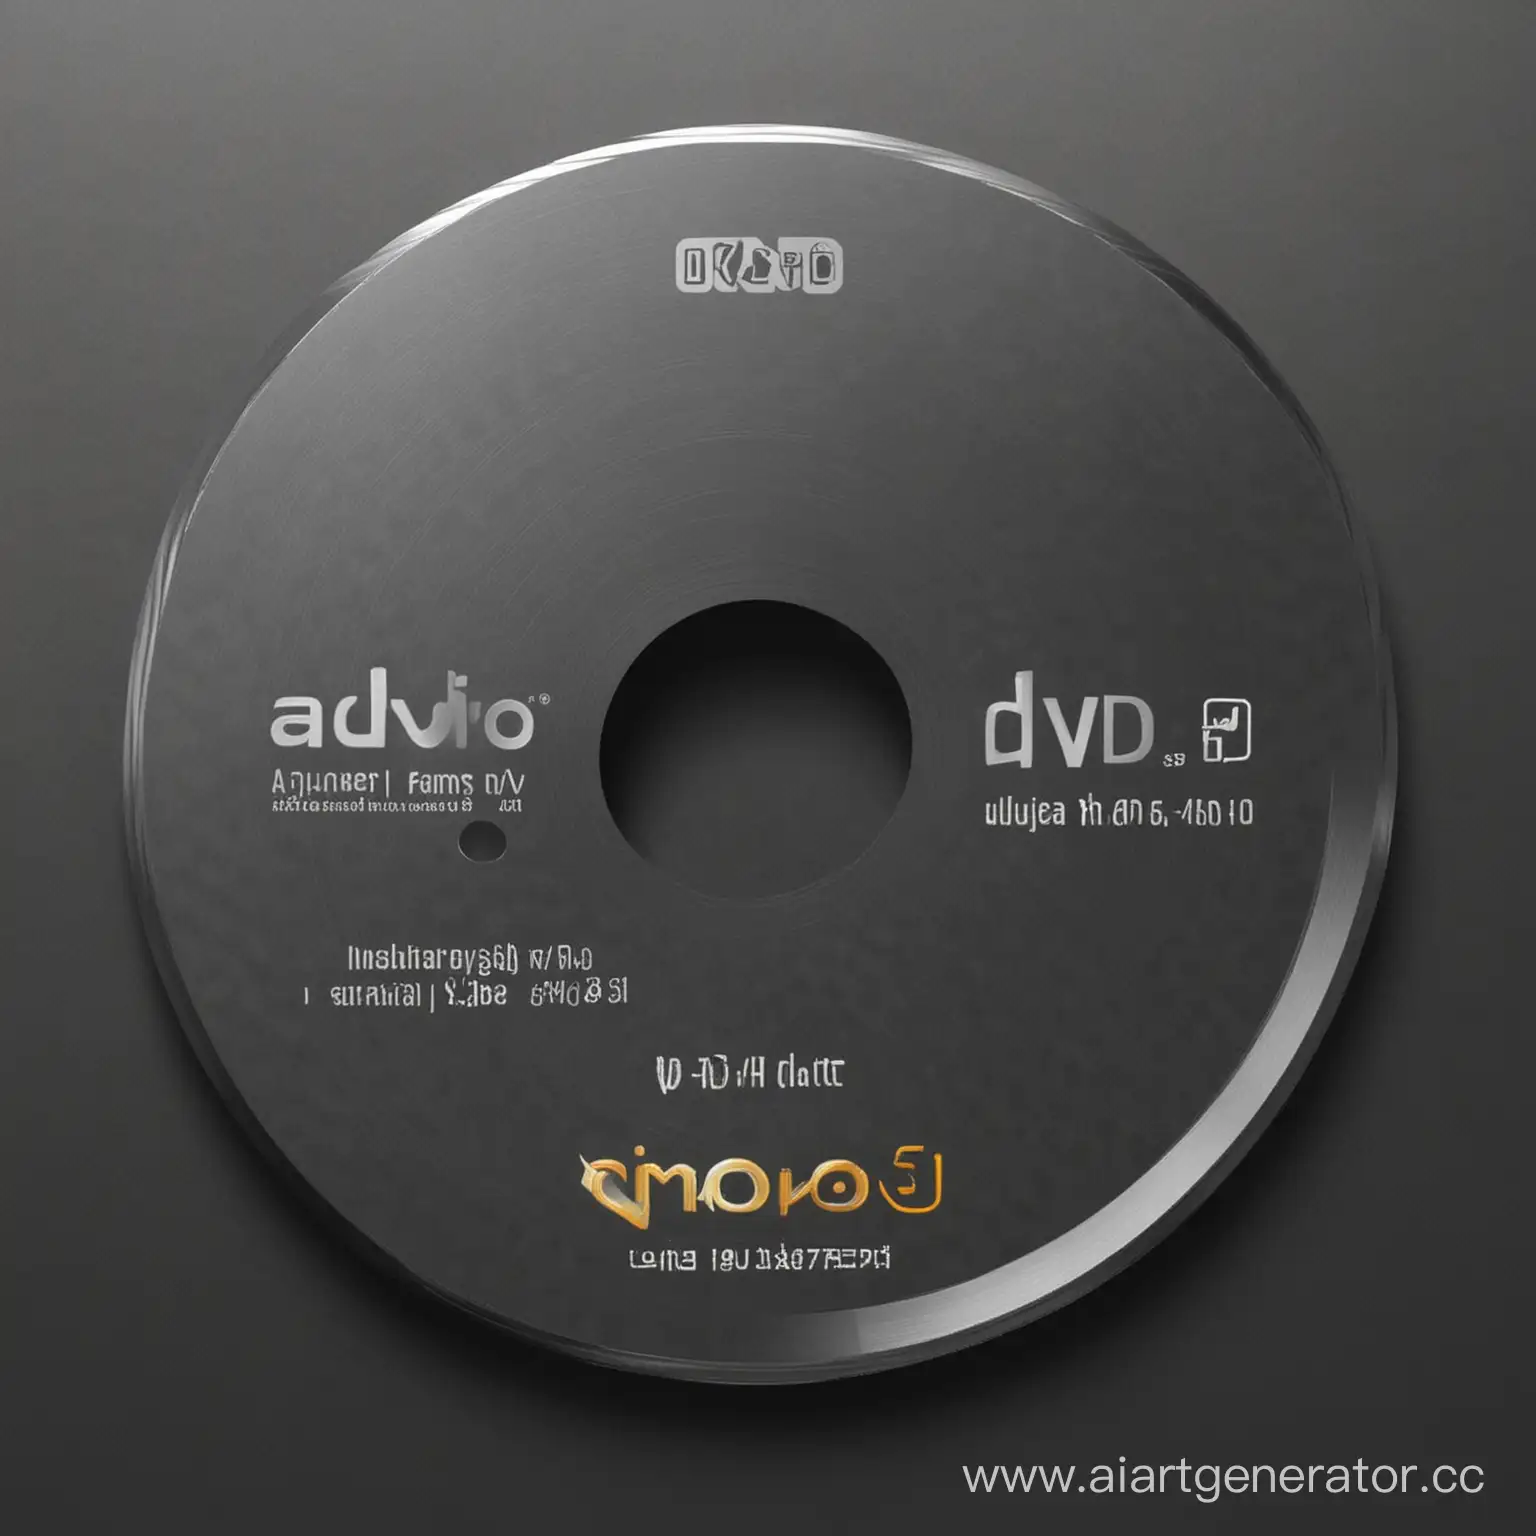 DVDAudio-Format-for-HighQuality-MultiChannel-Soundtracks